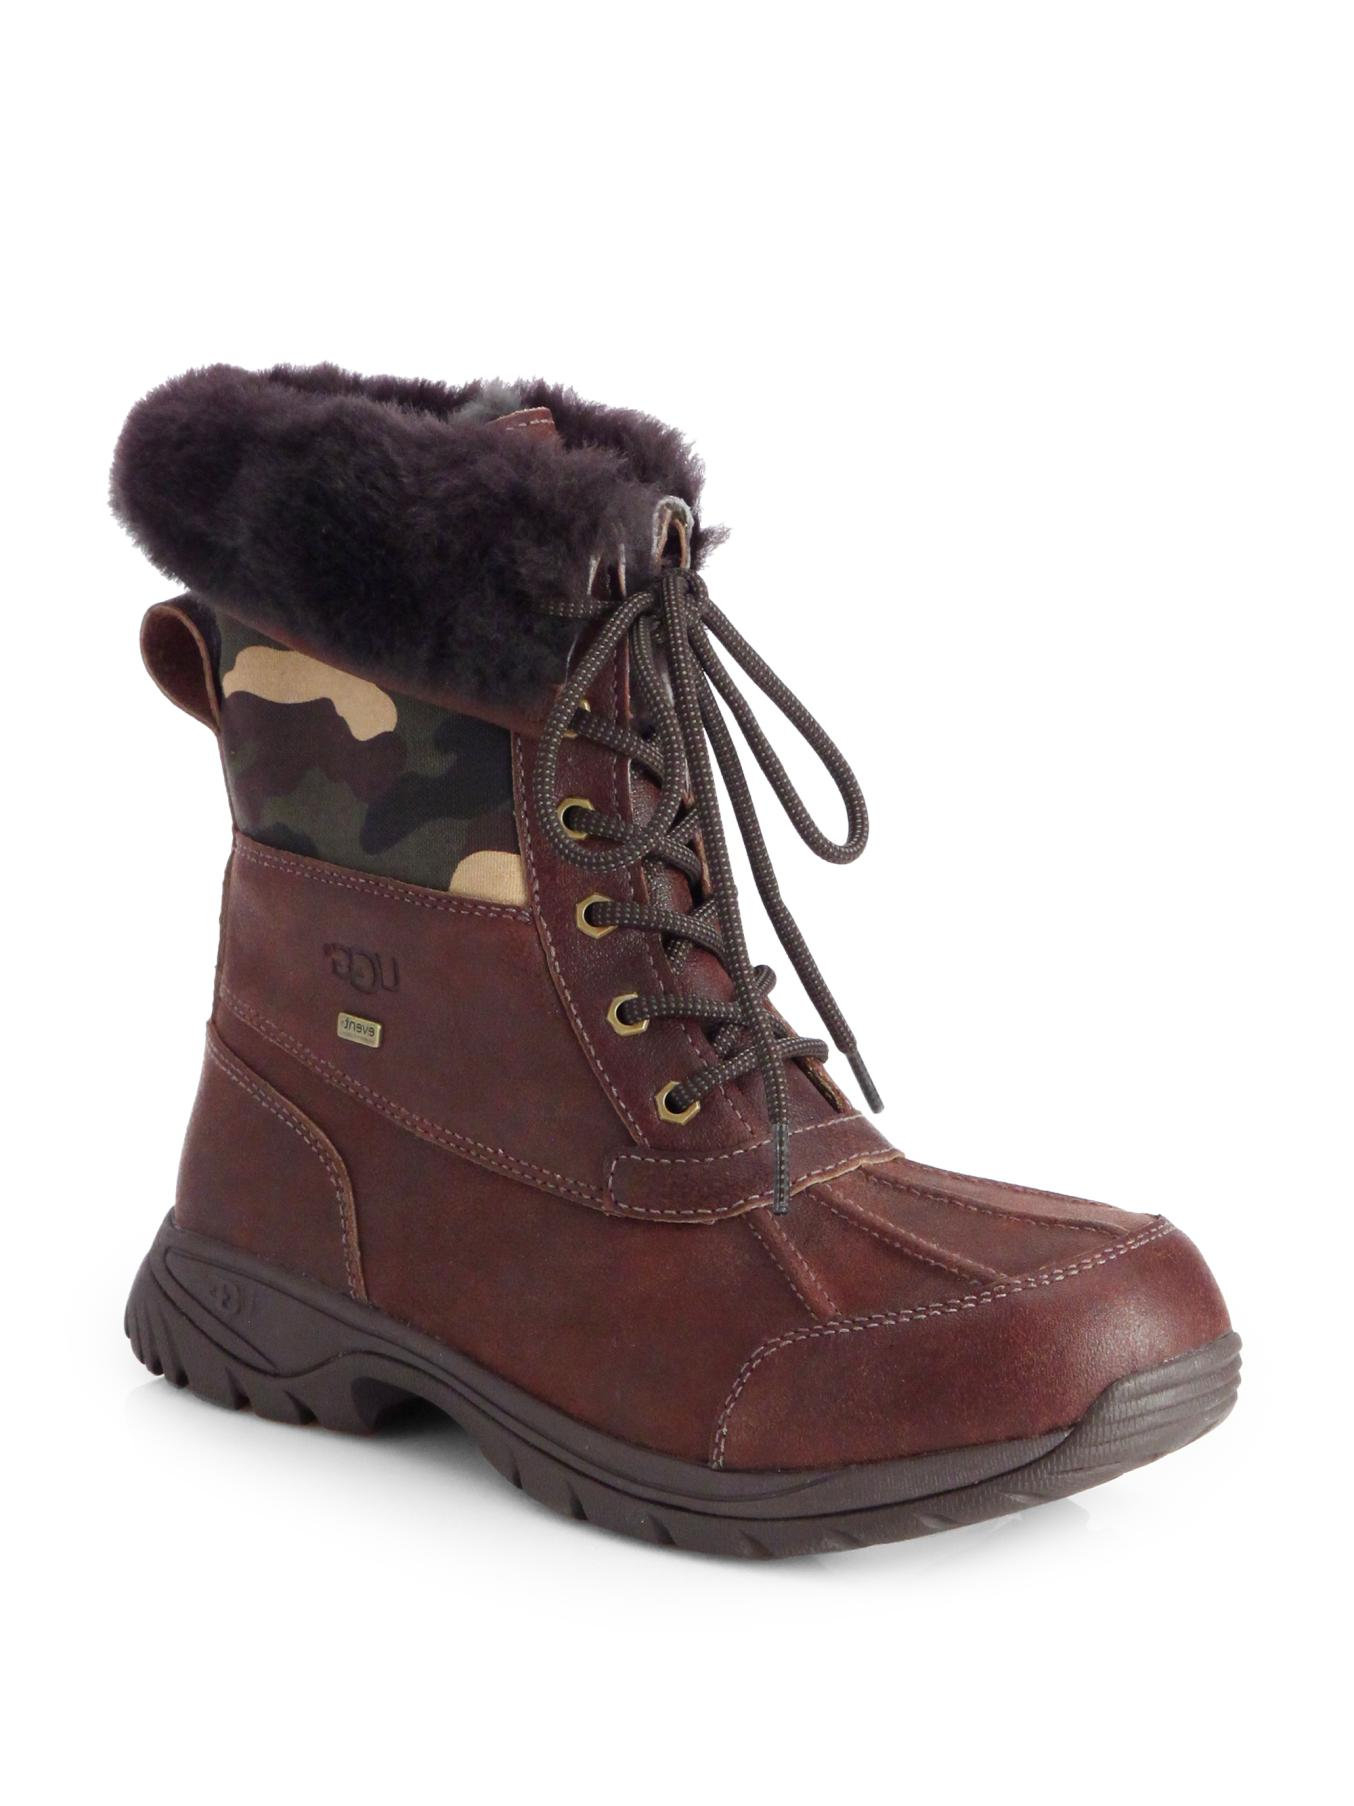 UGG Butte Camo Waterproof Boots in Brown Camo (Brown) for Men - Lyst